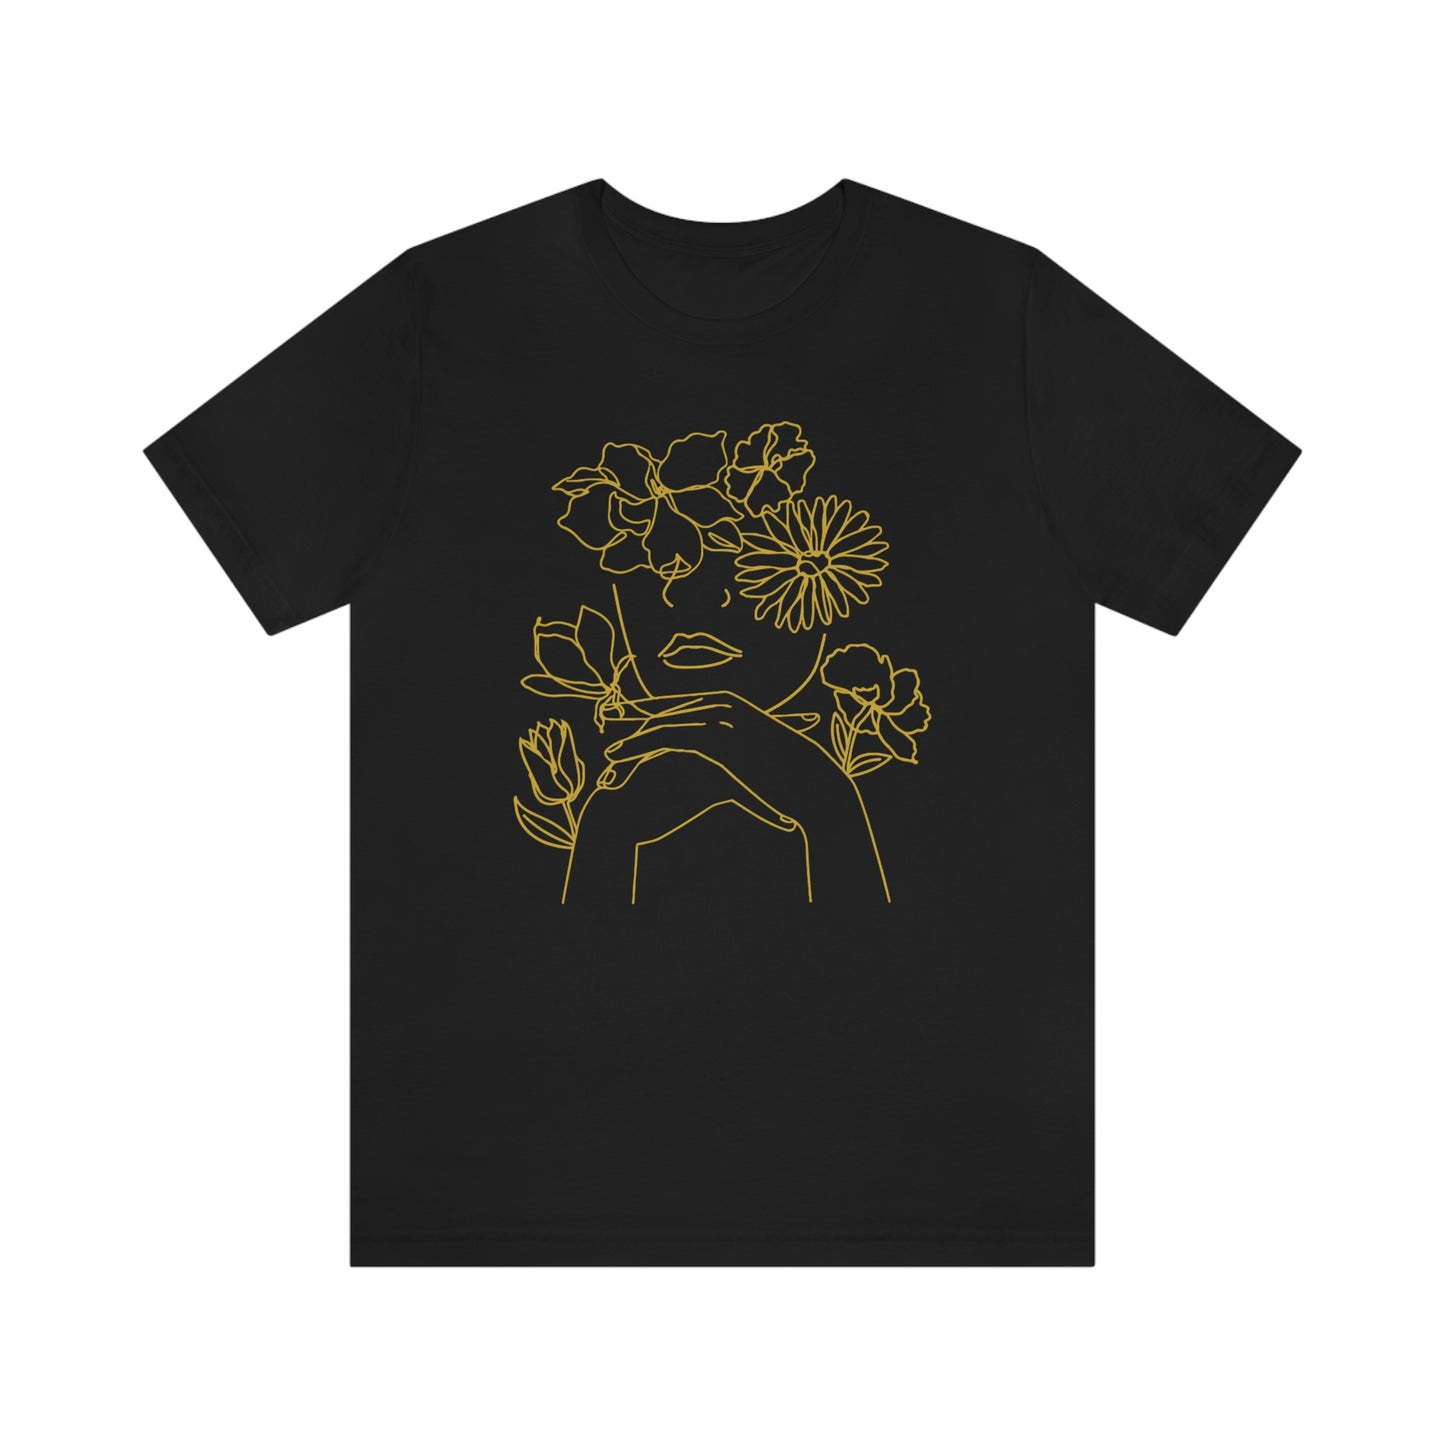 Woman Among the Flowers - Unisex T-Shirt